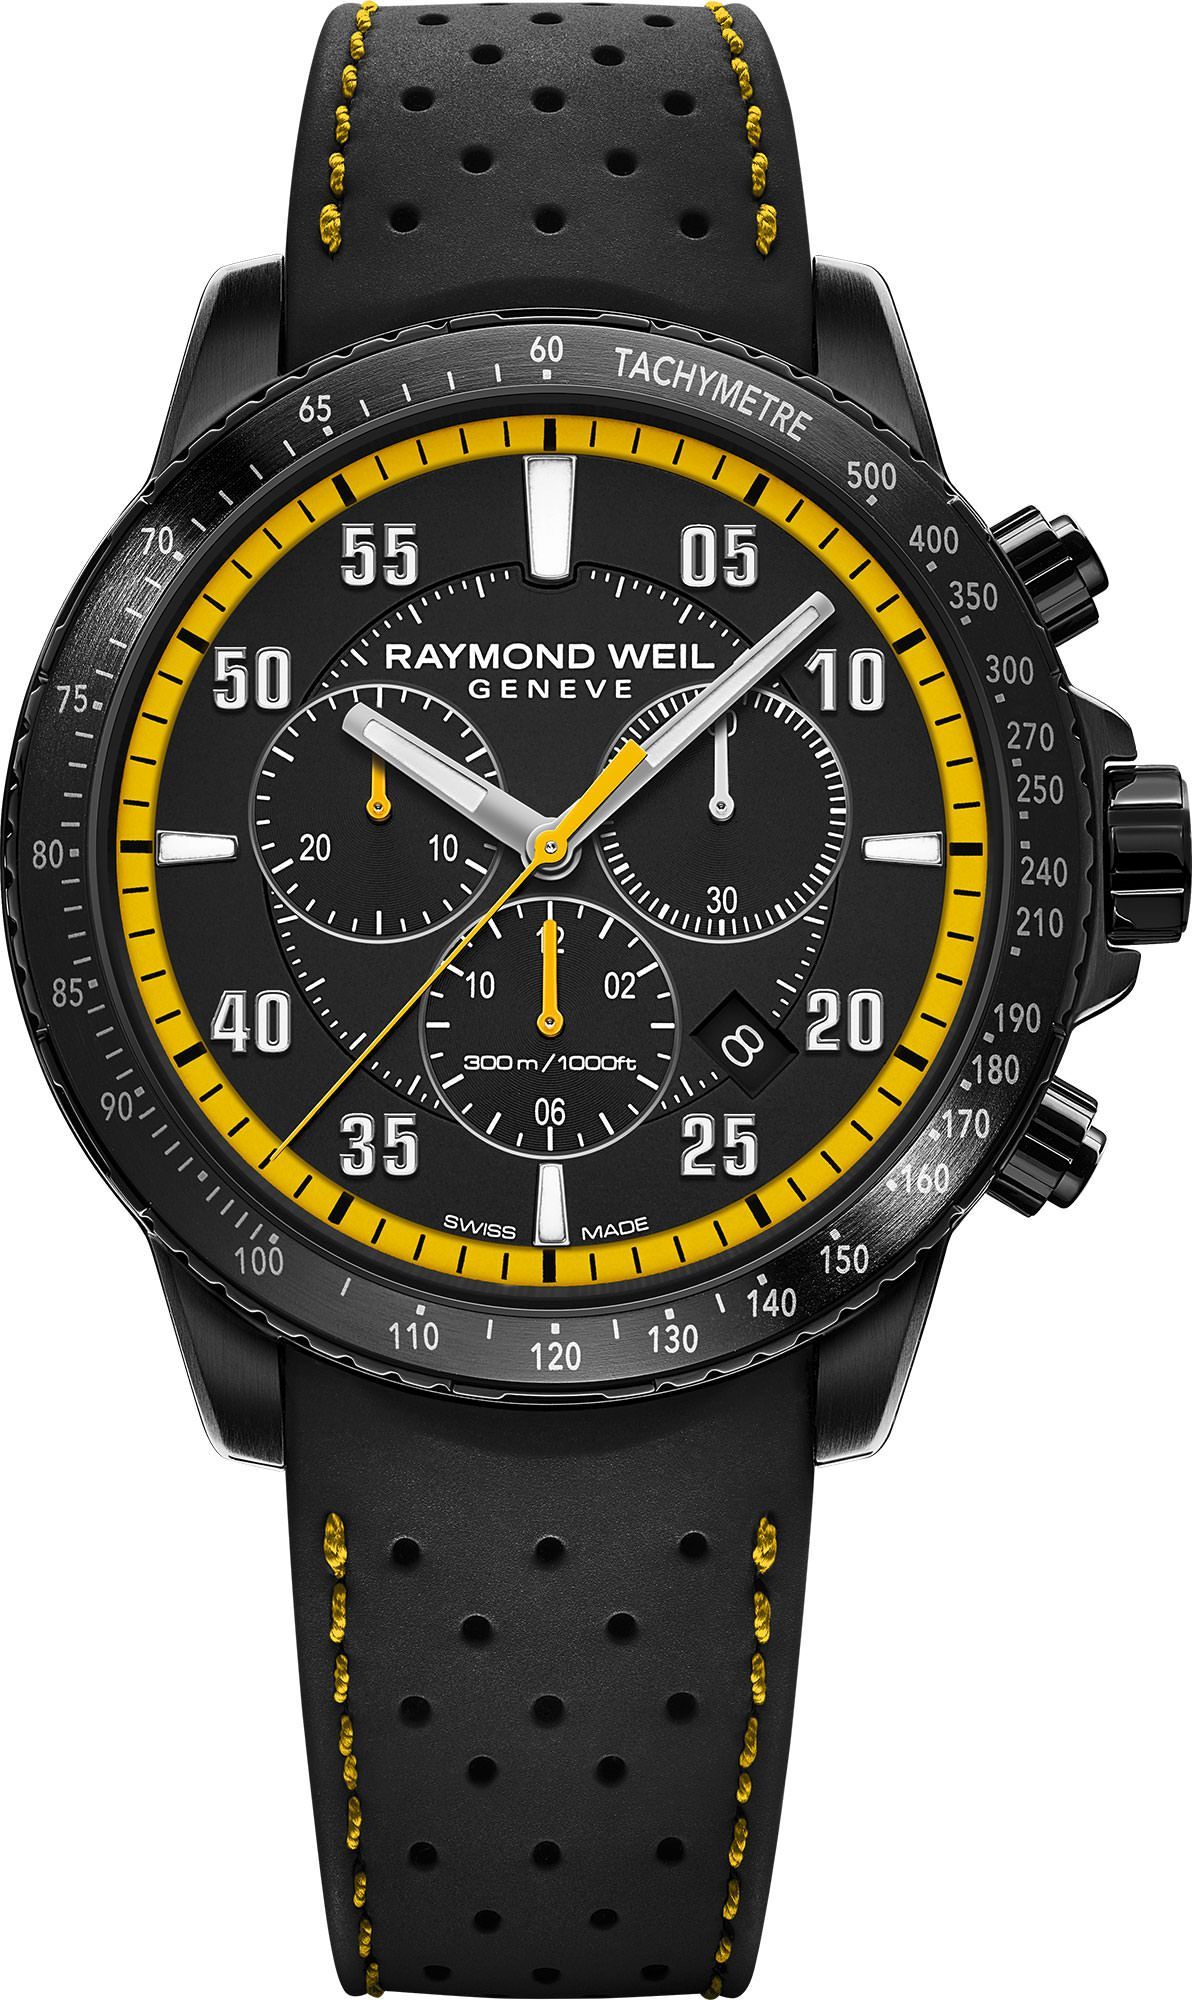 Raymond Weil Tango  Black Dial 43 mm Quartz Watch For Men - 1